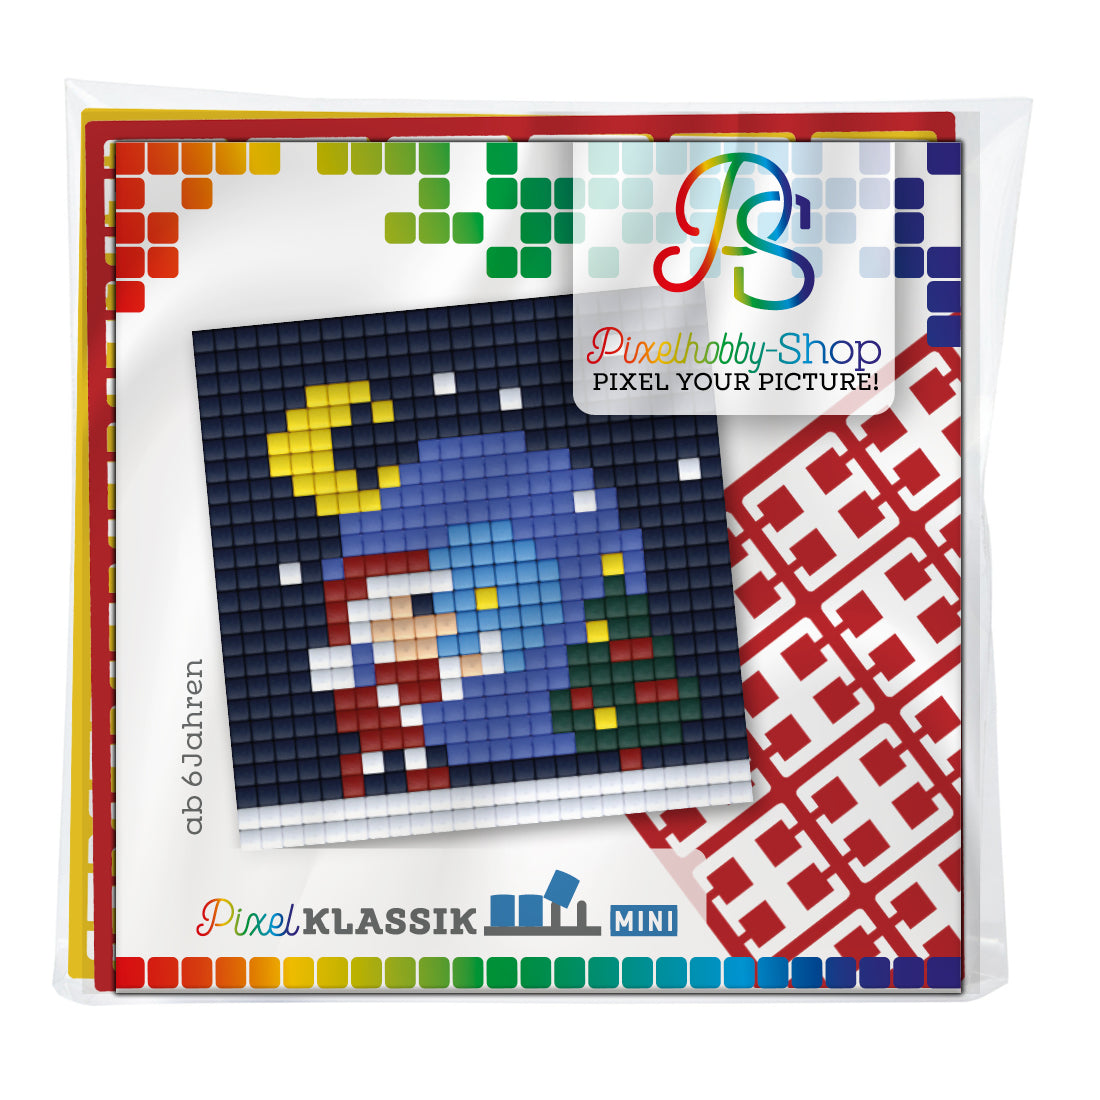 Pixelhobby classic (mini) magnet set - Santa Claus on the go